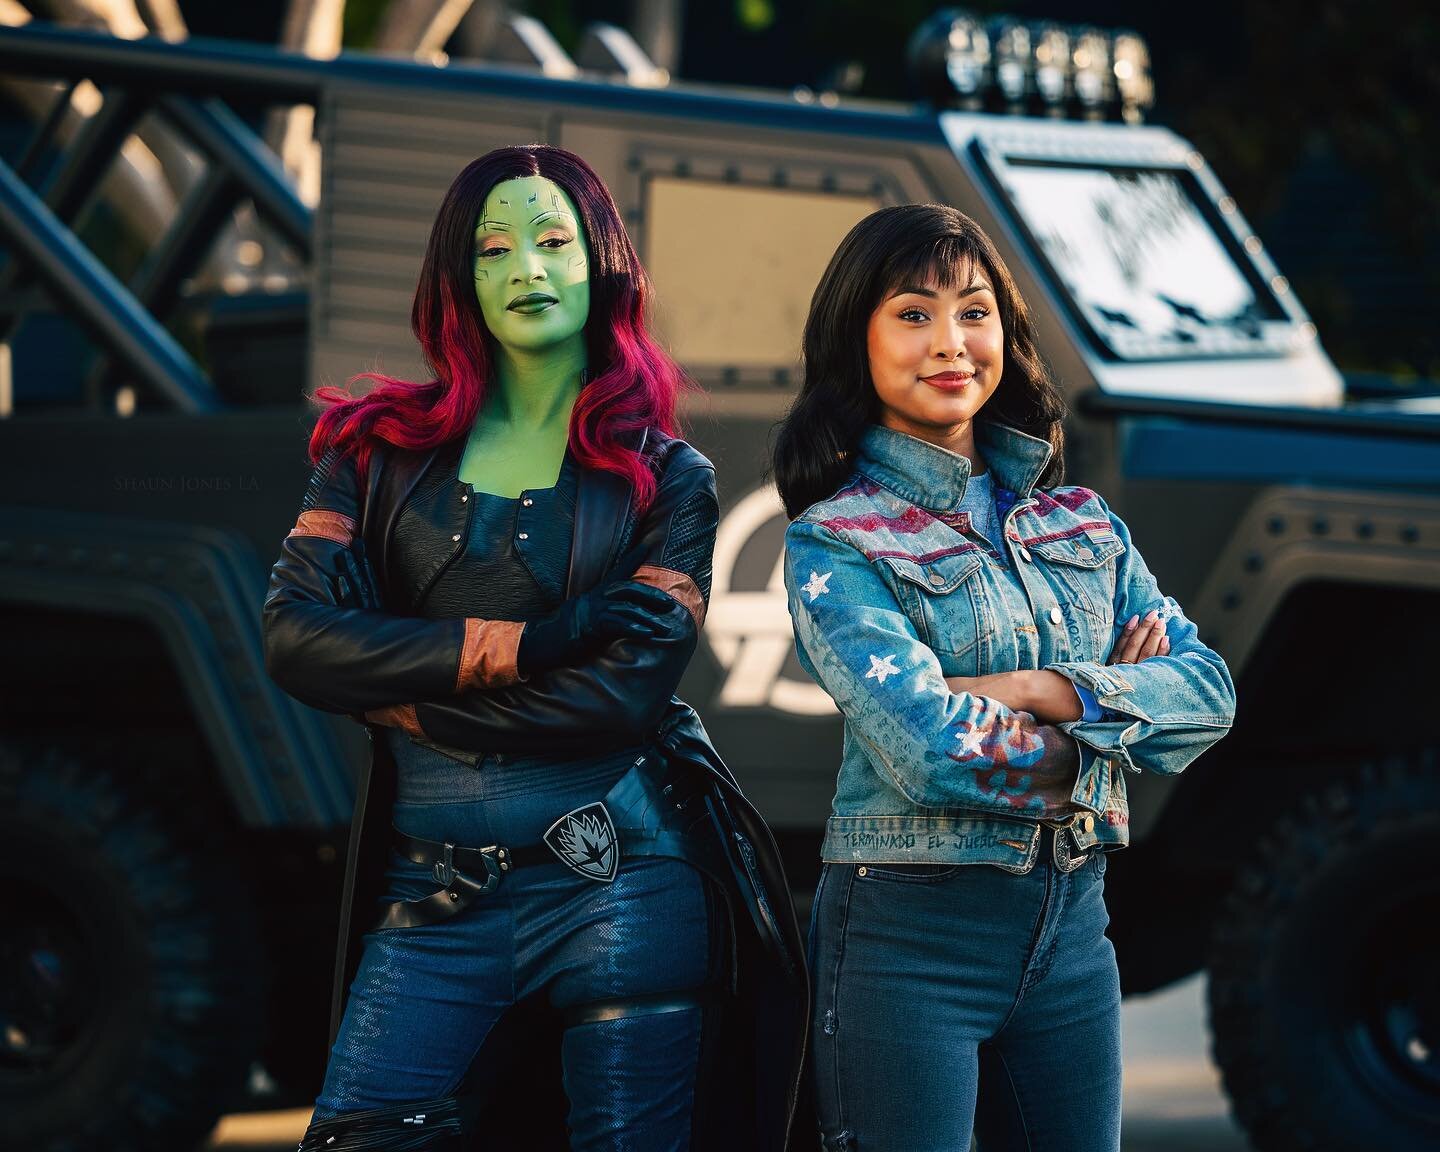 Hero Portraits - Gamora and America Chavez
#Disneyland #Marvel